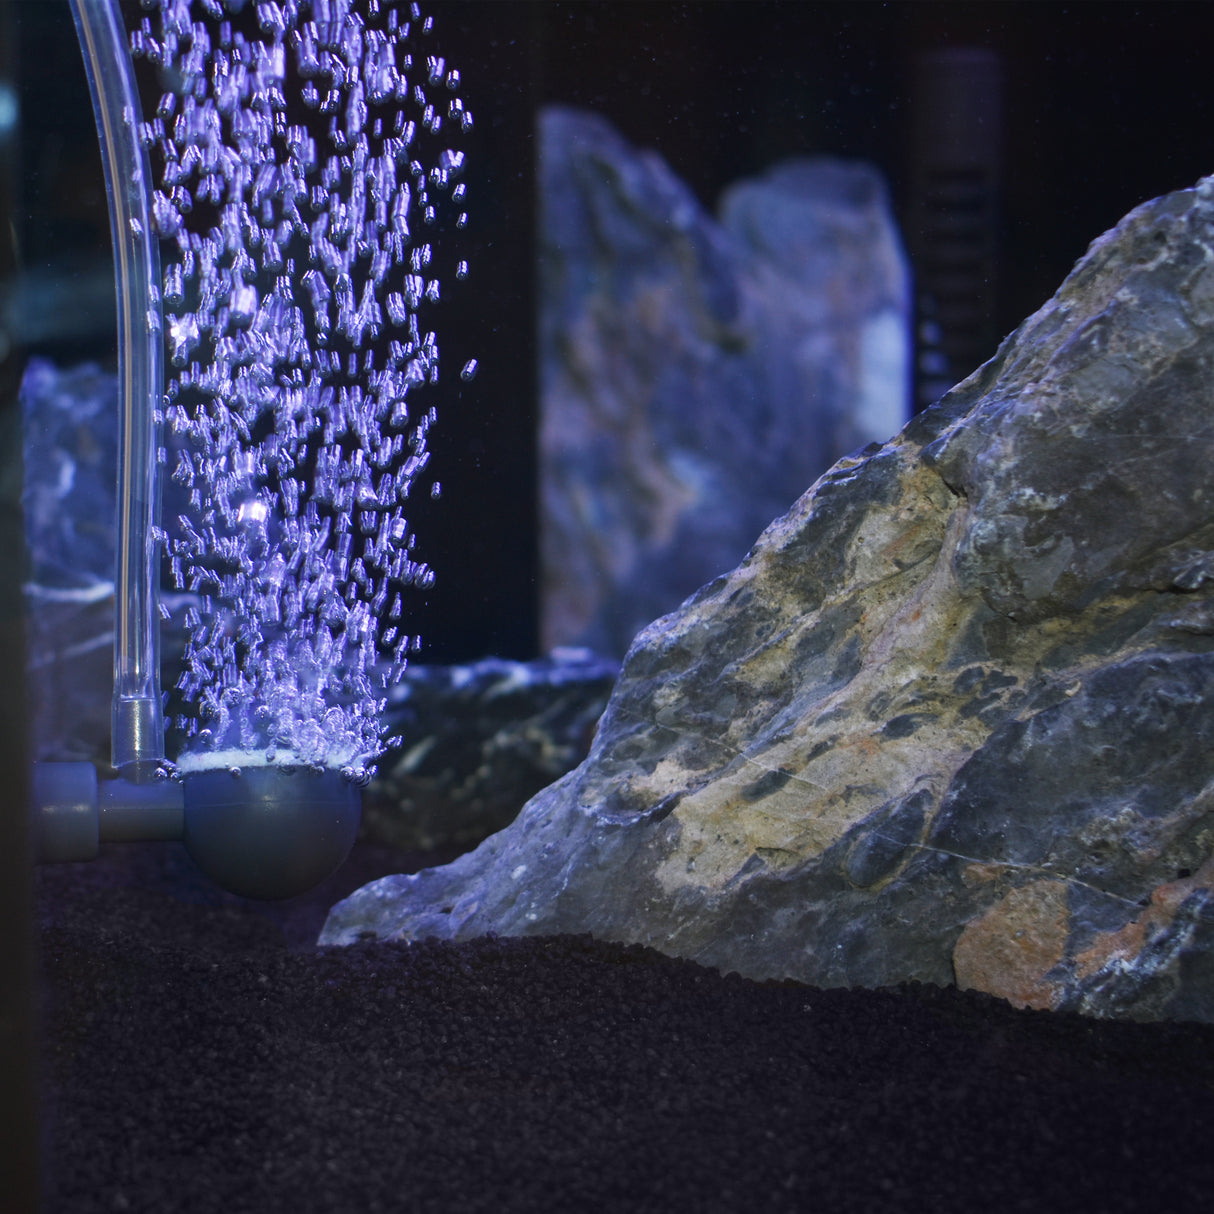 OASE OxyMax 100 diffuser in an aquarium producing bubbles